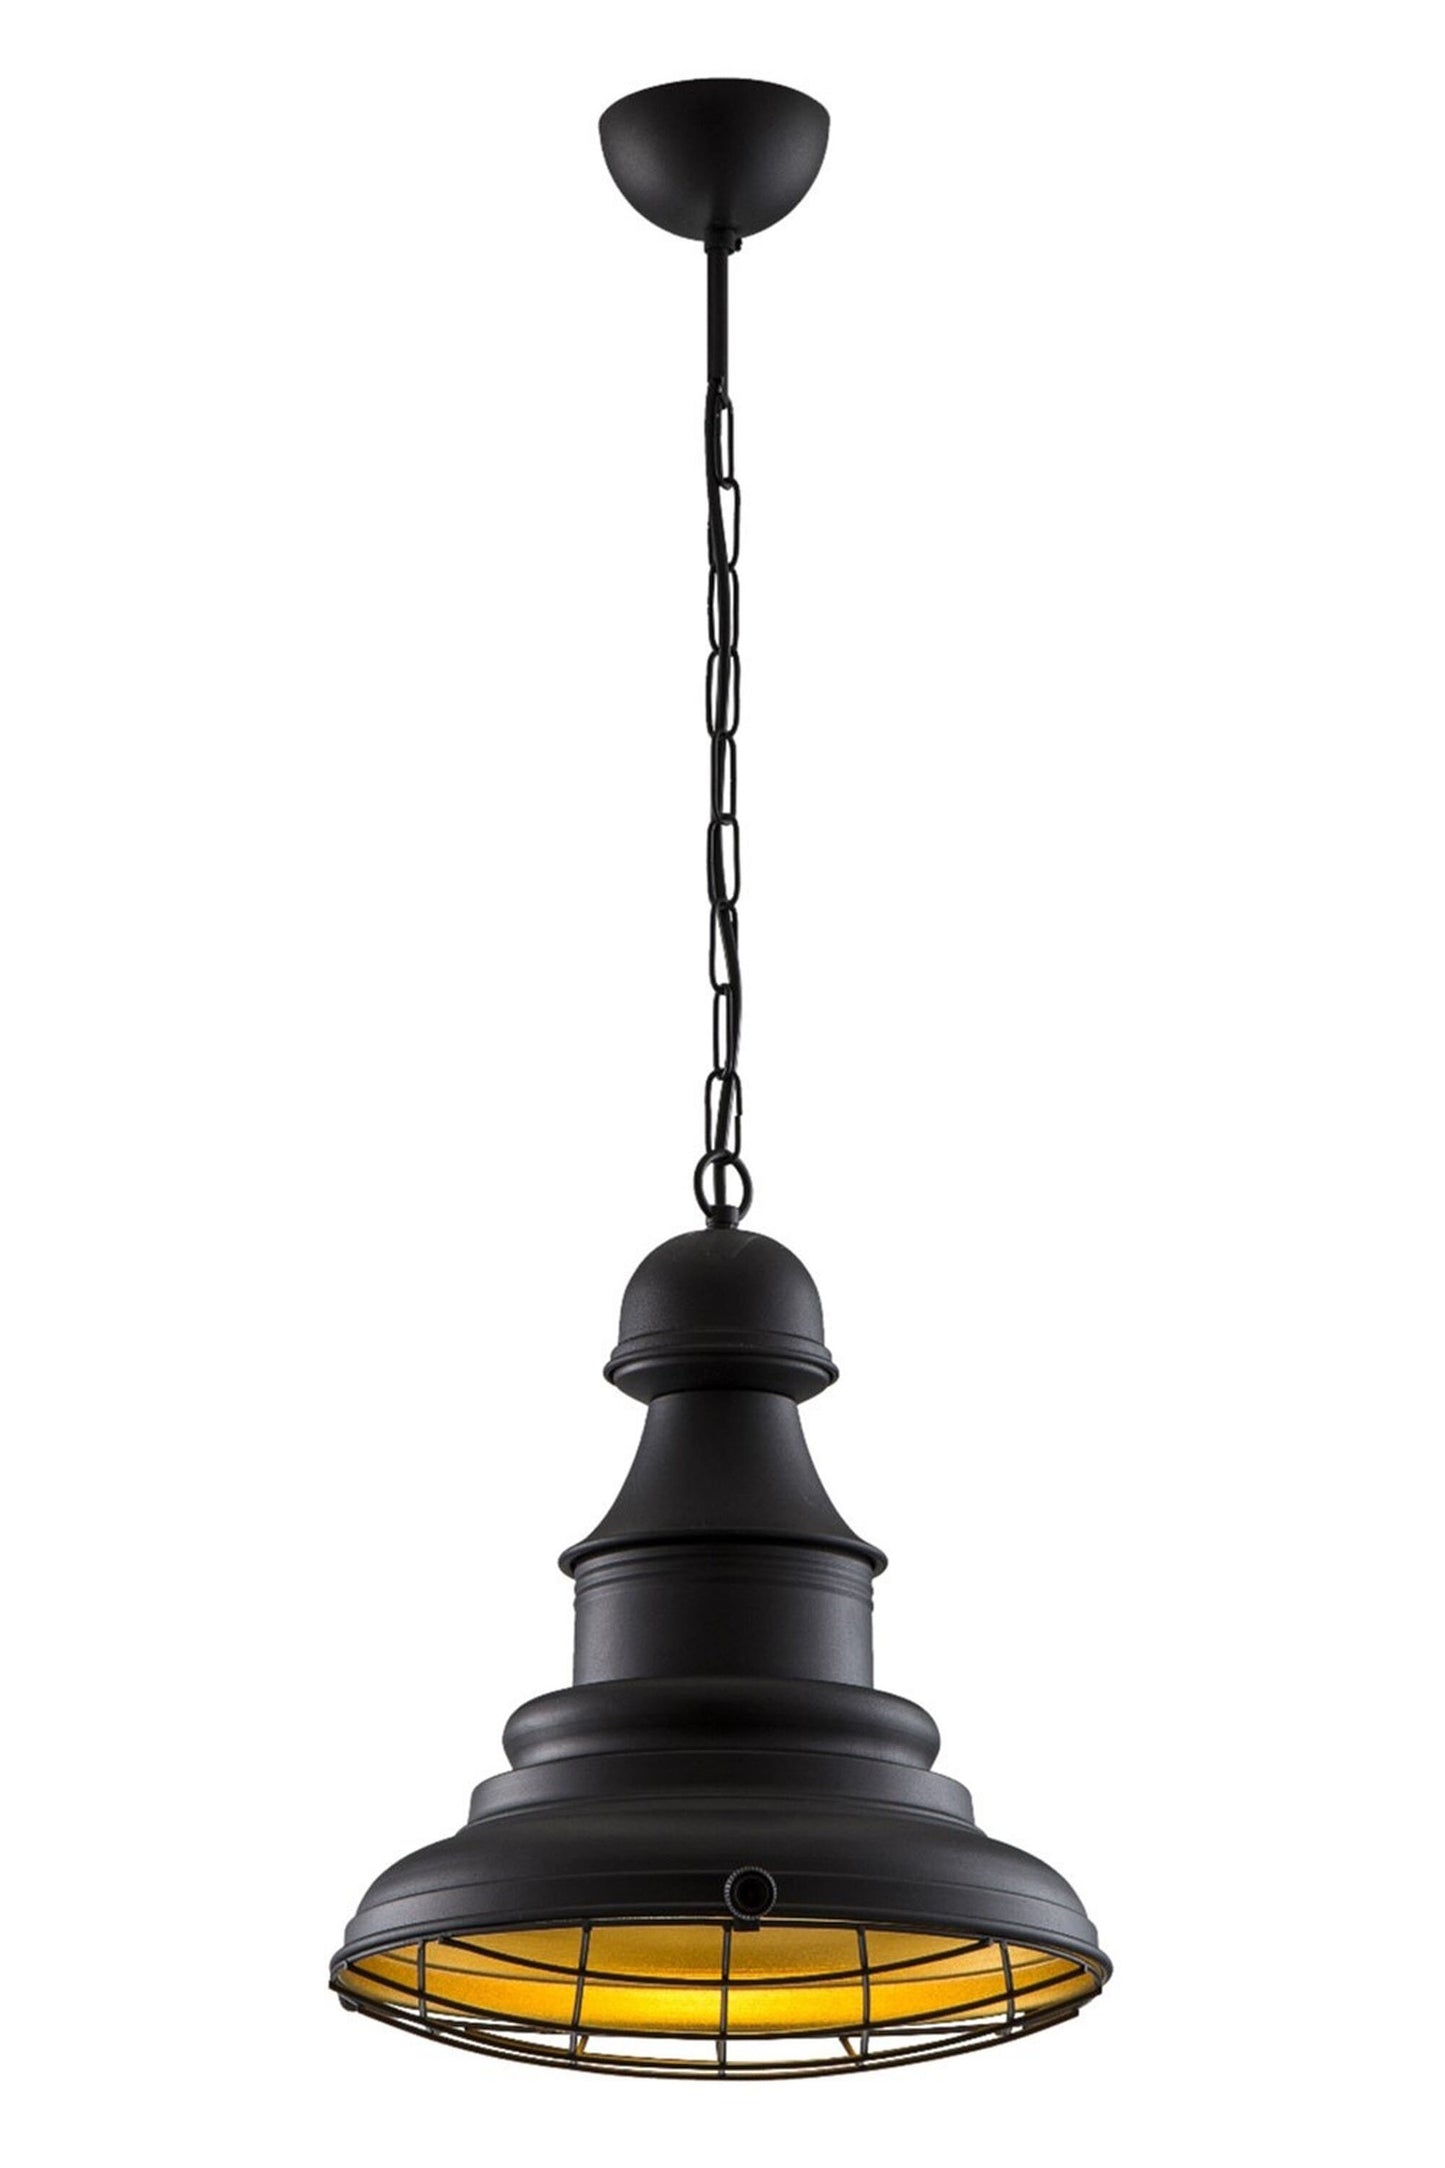 PENDANT LIGHTING, INDUSTRIAL Light, Vintage Pendant Light, Hanging Loft Lamp, Hanging Home Lighting, Ceiling Light, Black Pendant Light